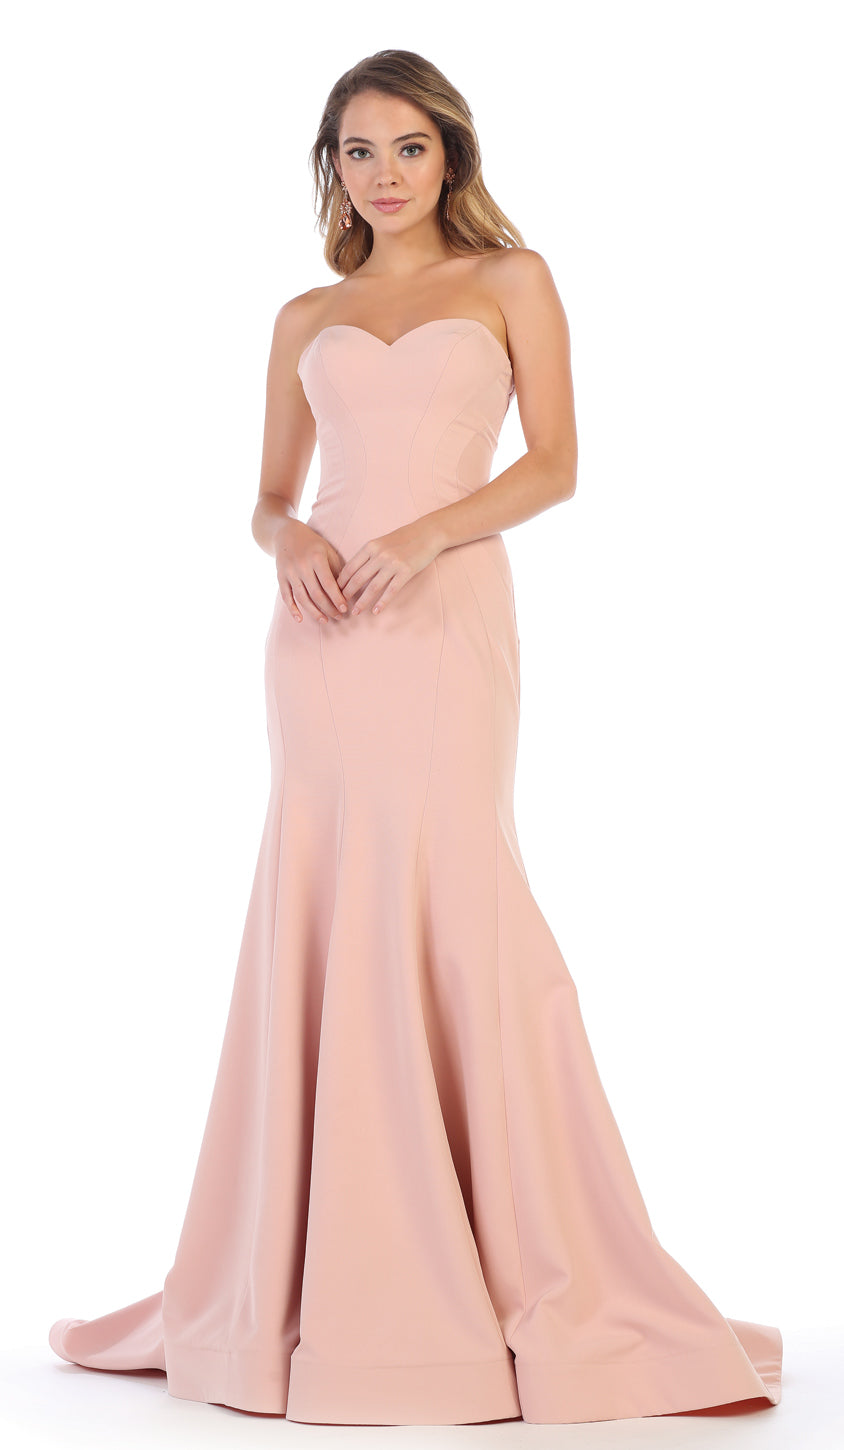 Strapless Bridesmaid Dress - LA7703